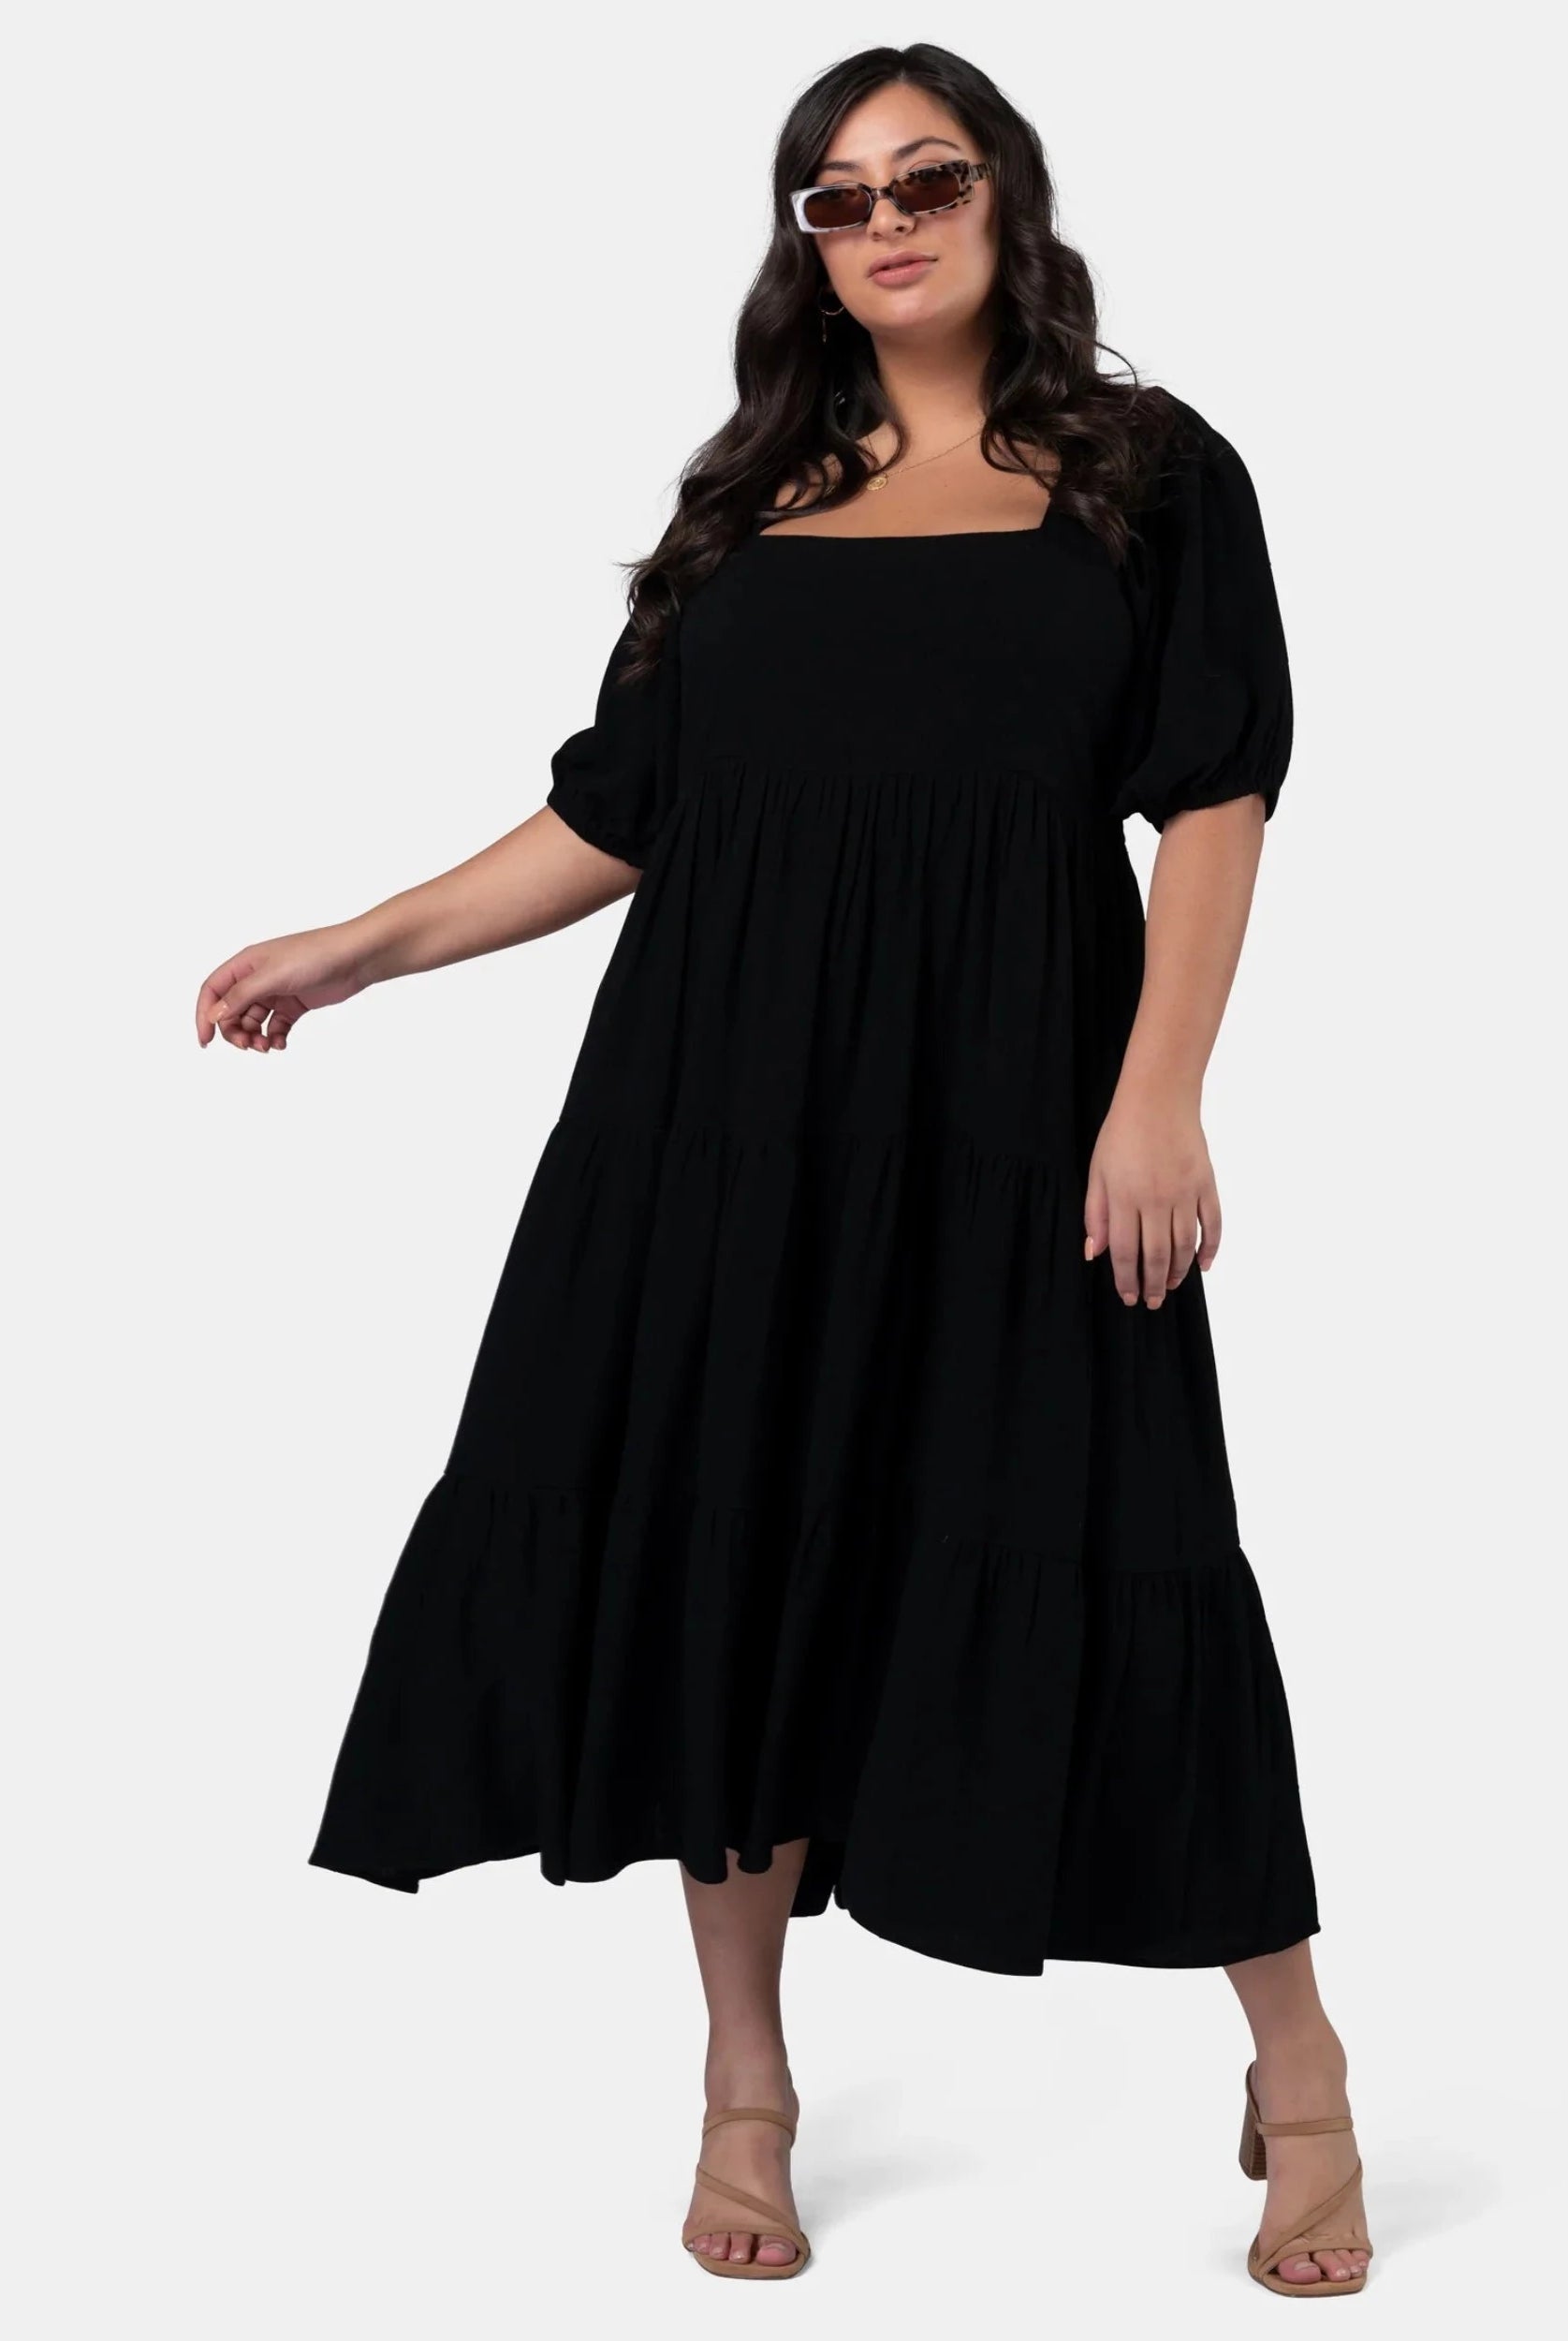 Black Isadora dress